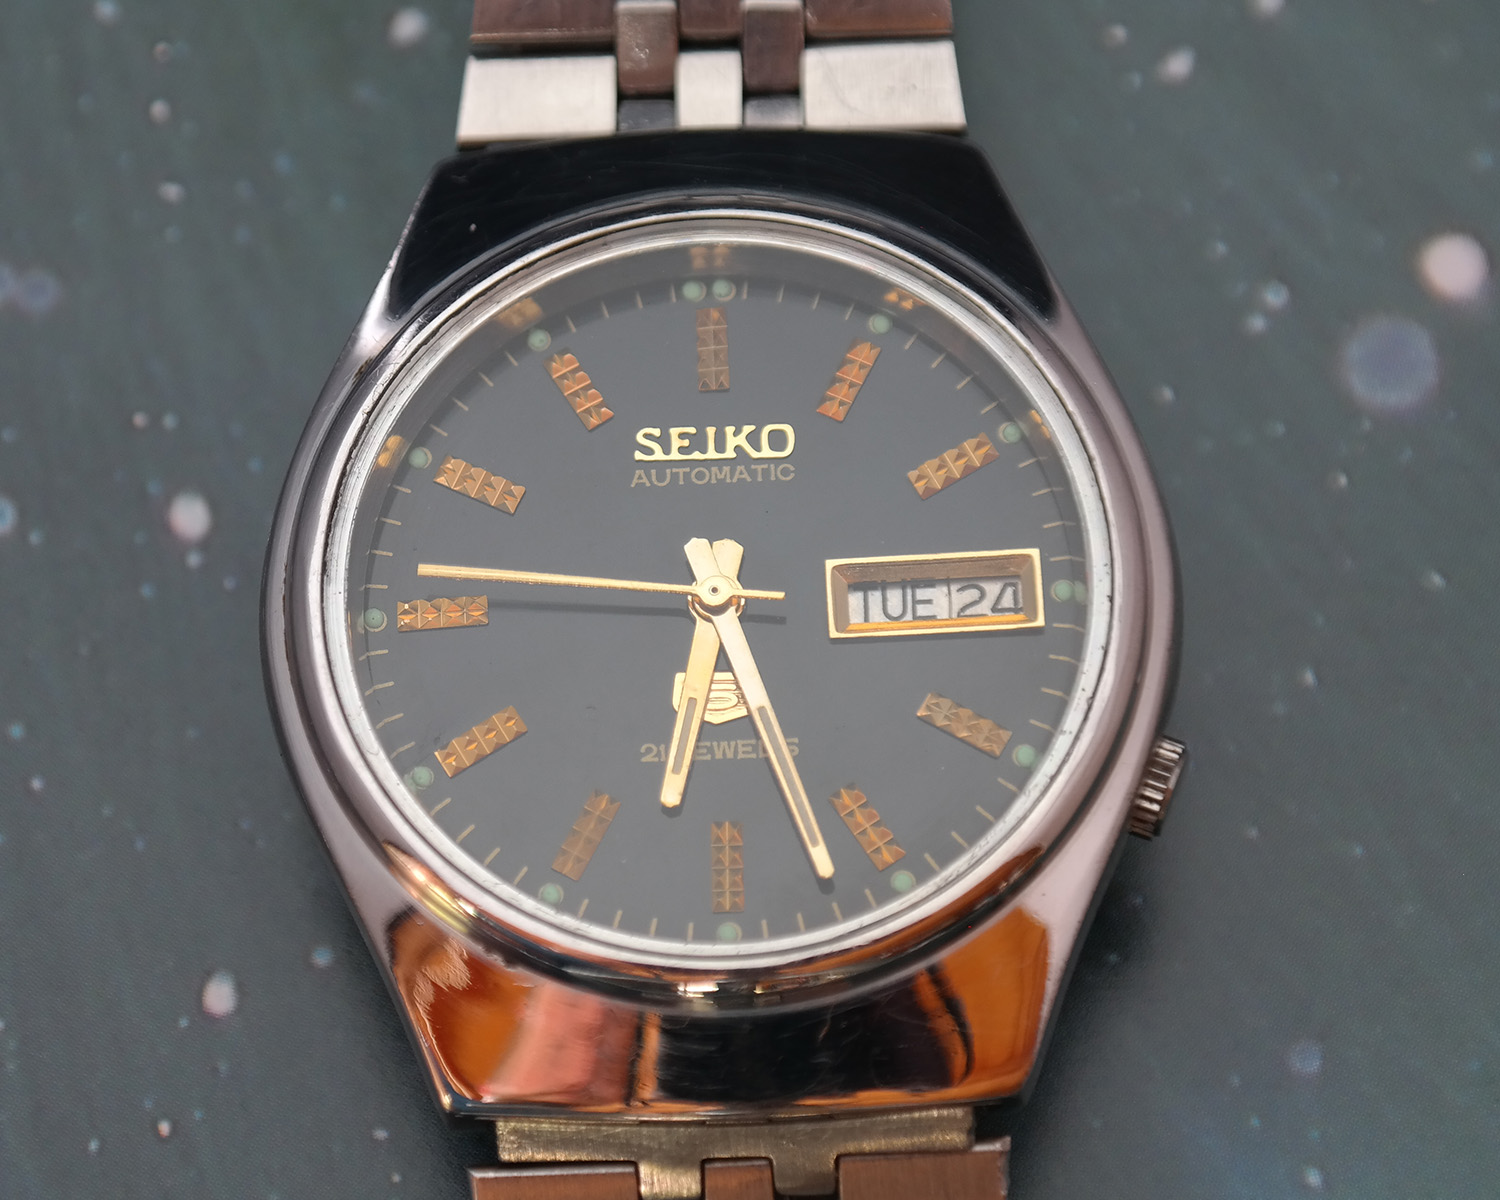 Seiko 7S26-6000 — Retro Wrist Wear